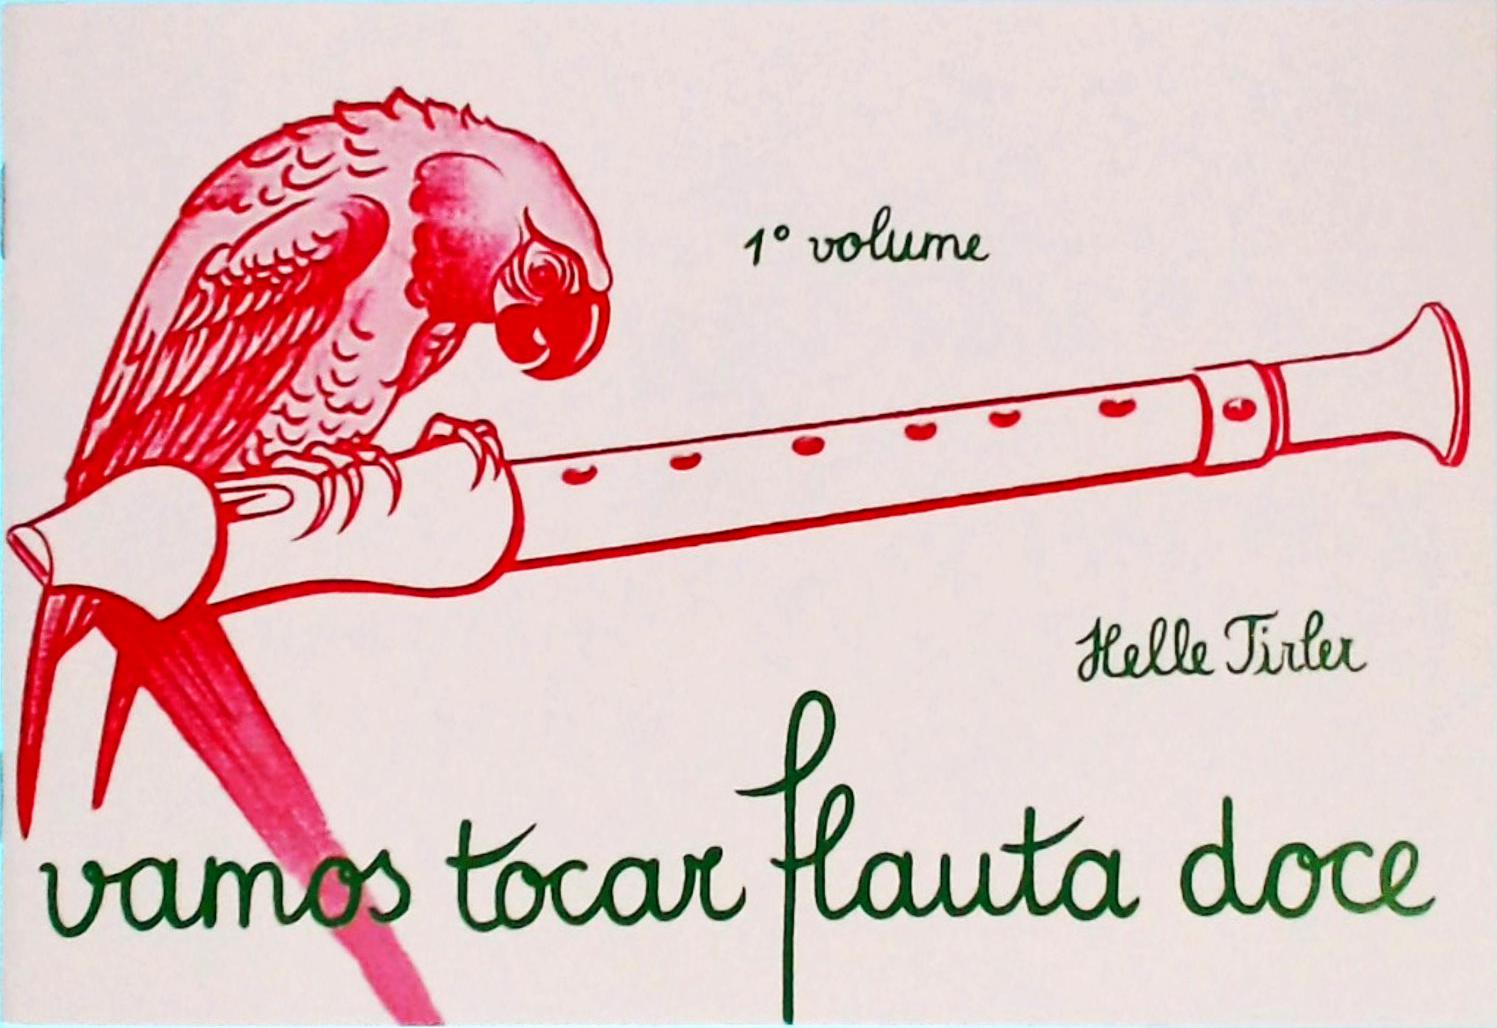 Vamos Tocar Flauta Doce Vol 1